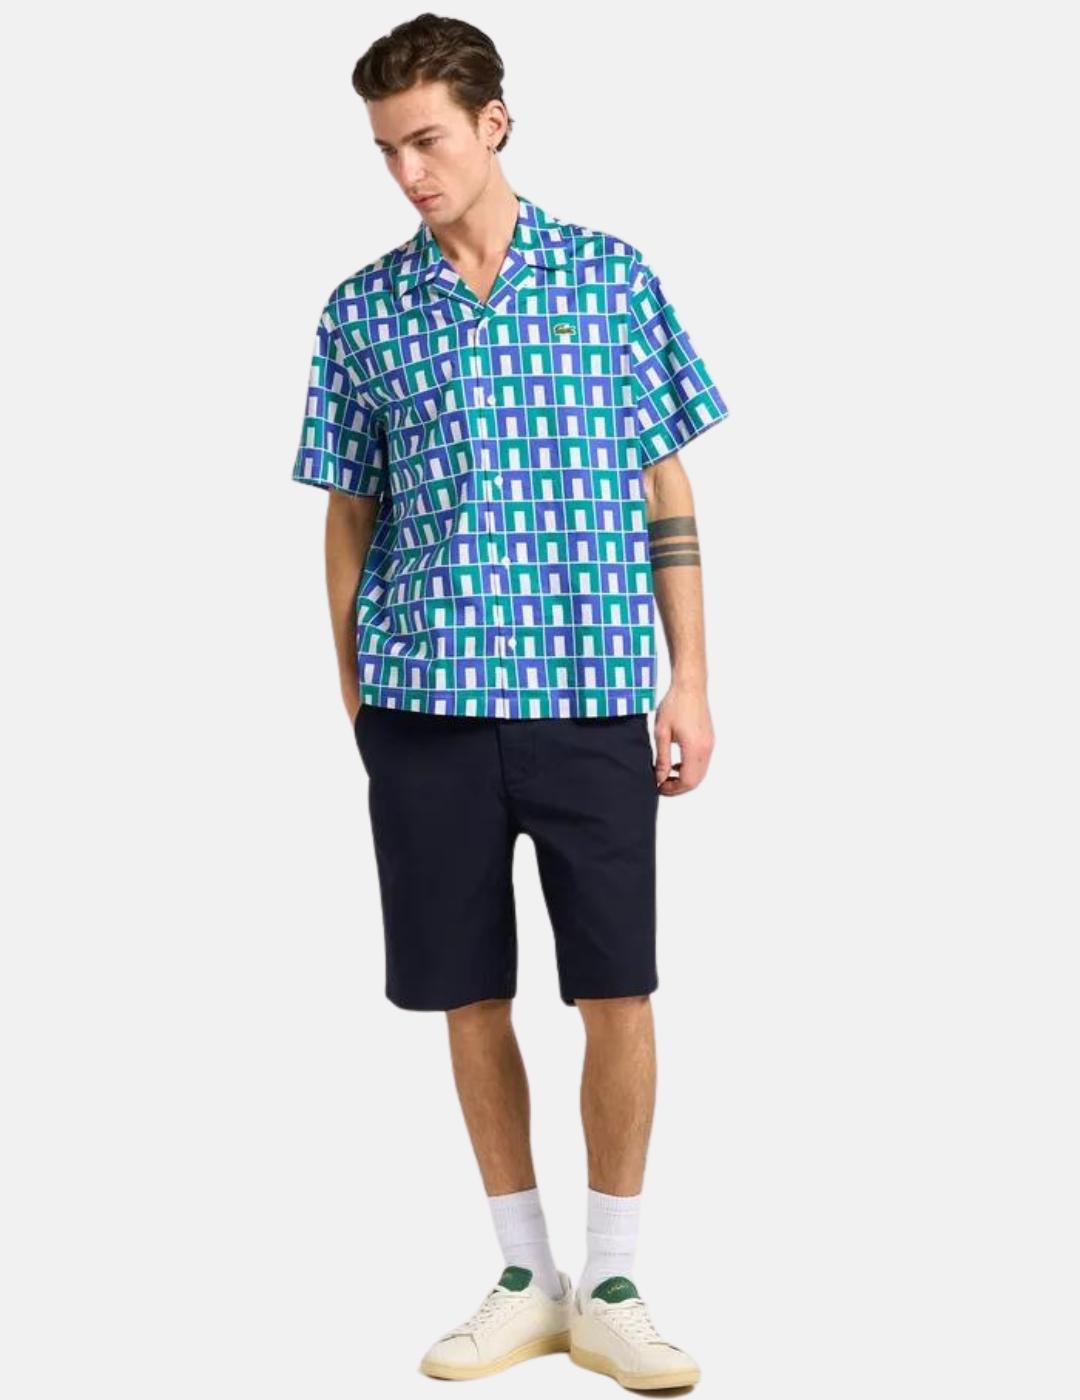 Camisa Lacoste CC Print verde/azul hombre